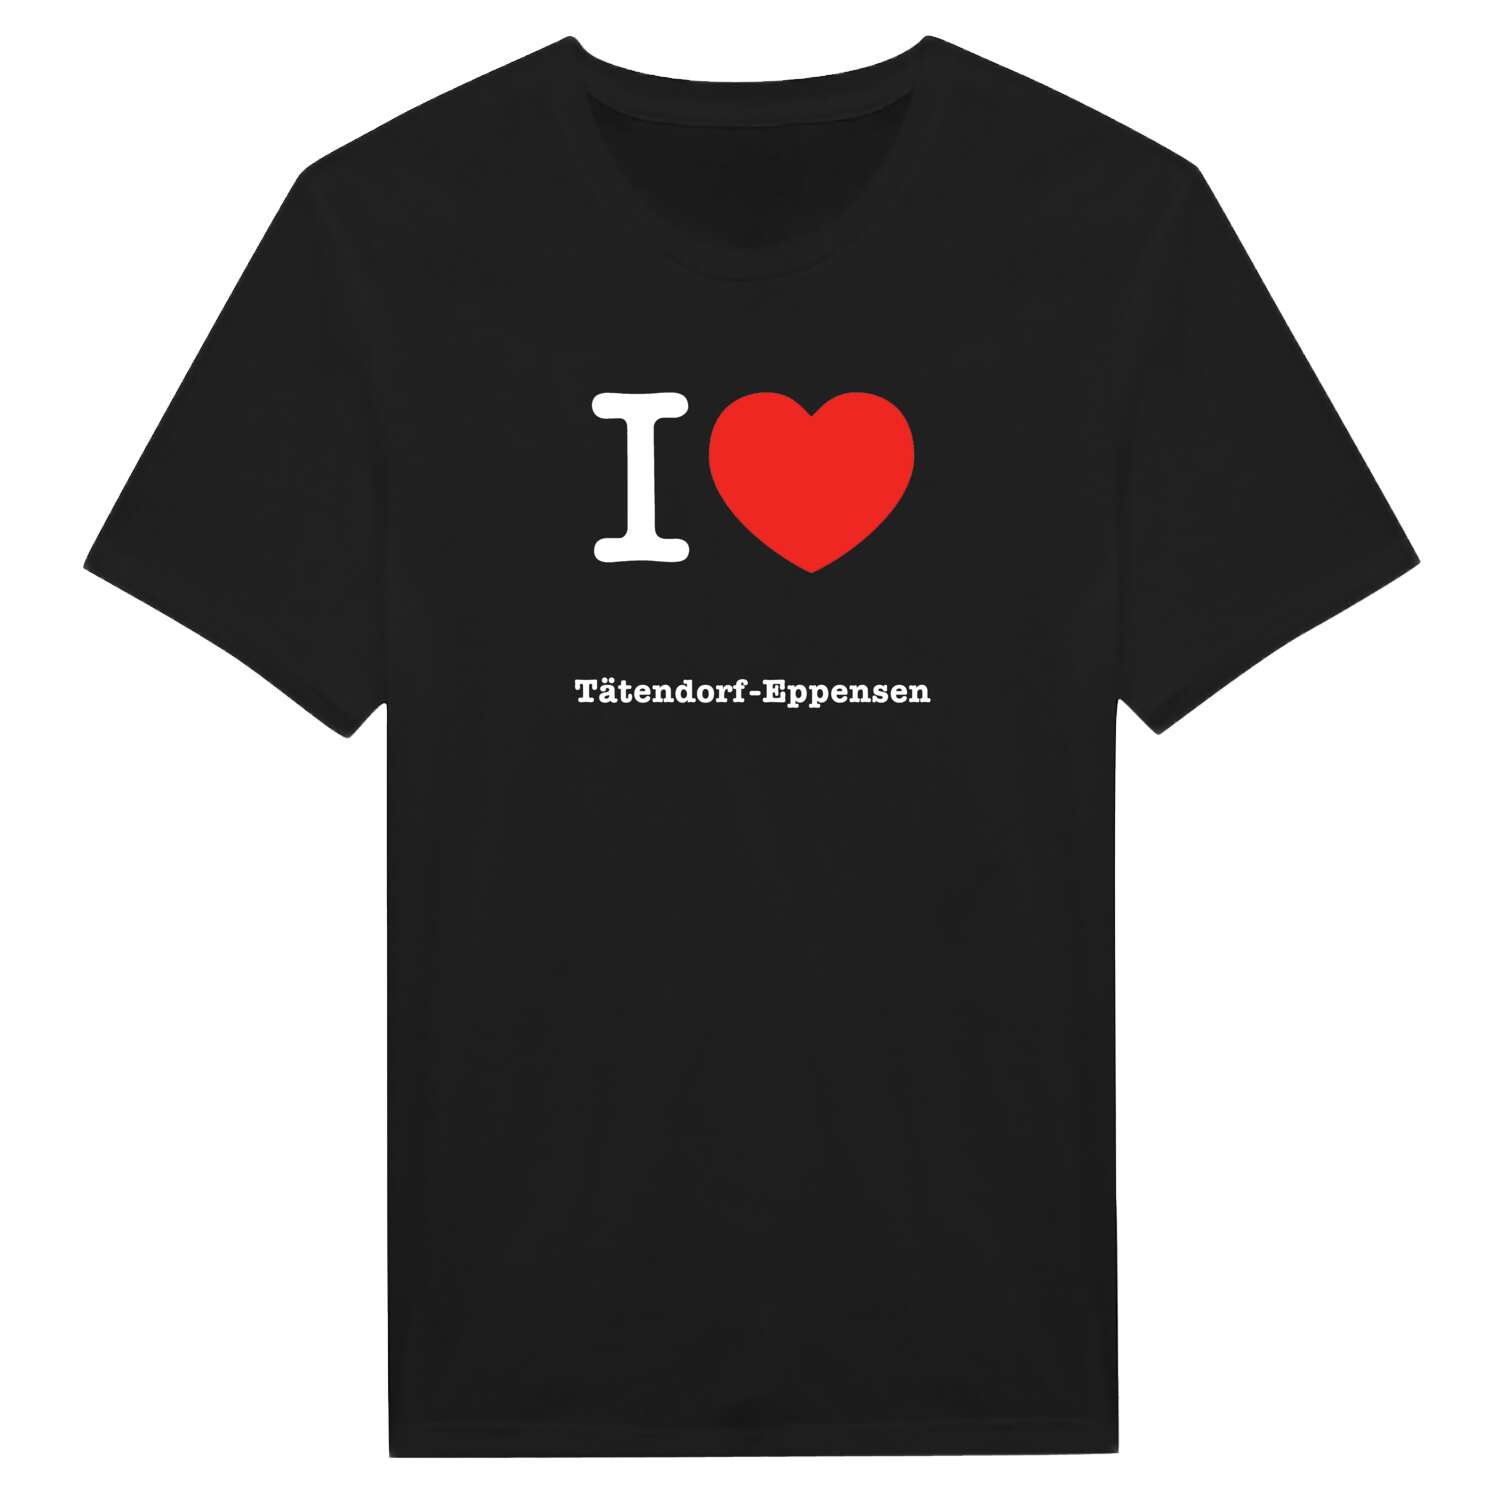 Tätendorf-Eppensen T-Shirt »I love«